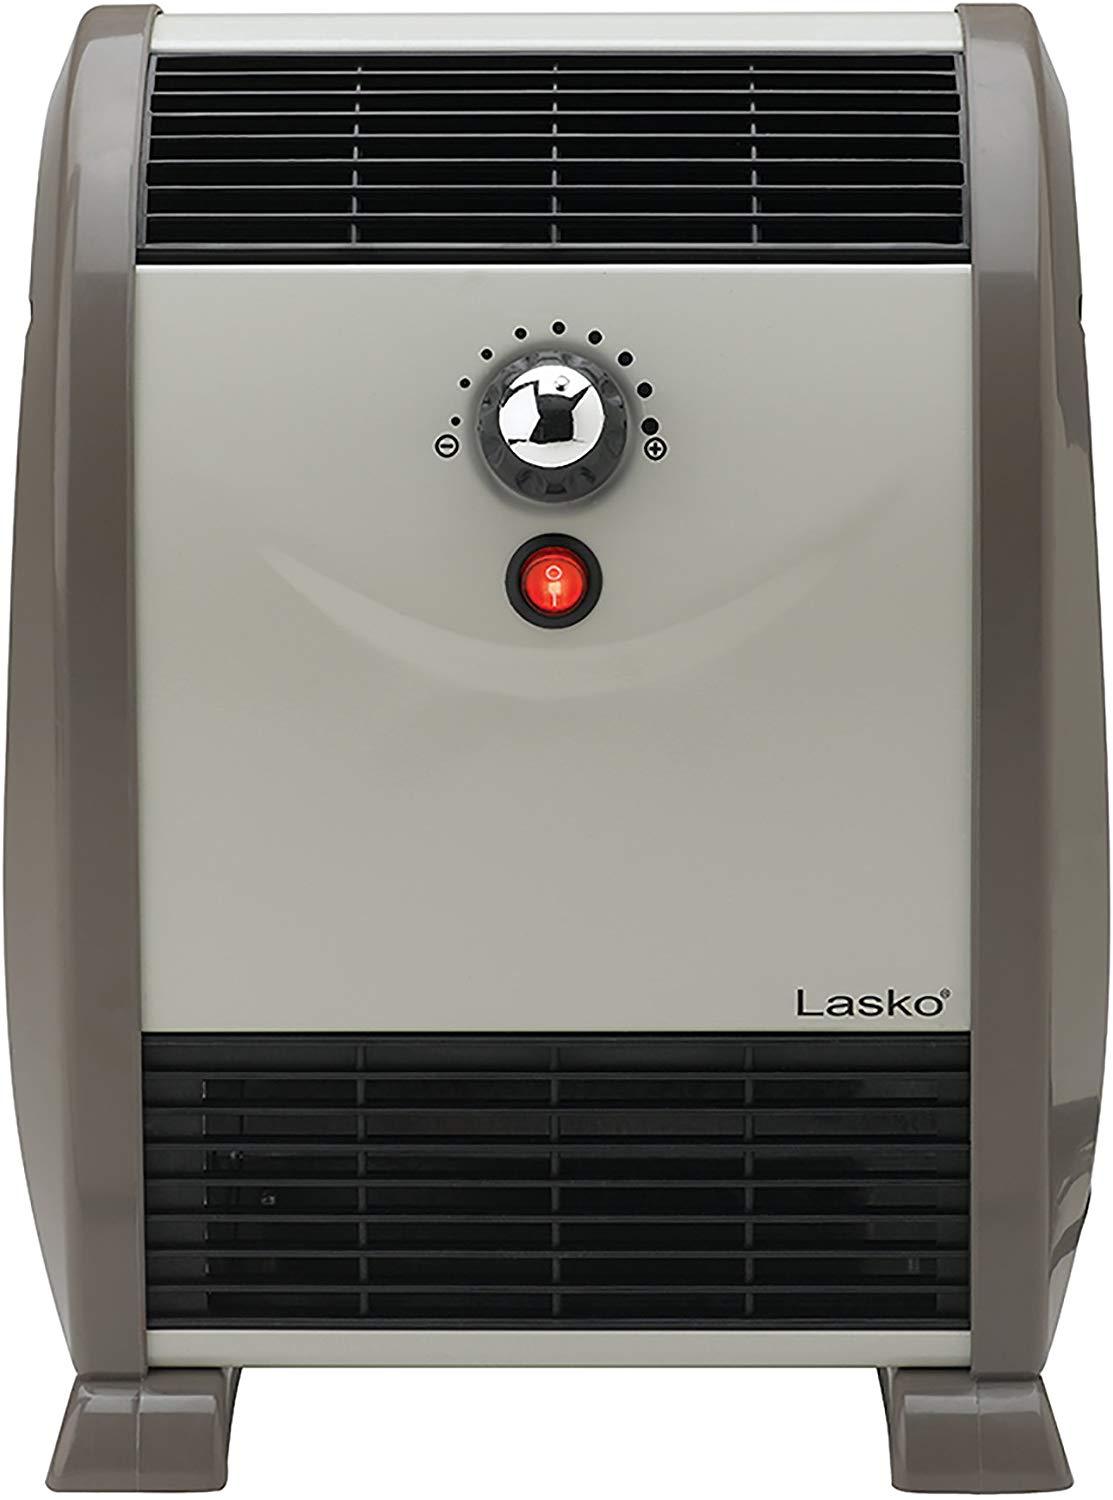 Lasko 5812 750w Automatic Air Flow Electric Space Heater Graphite